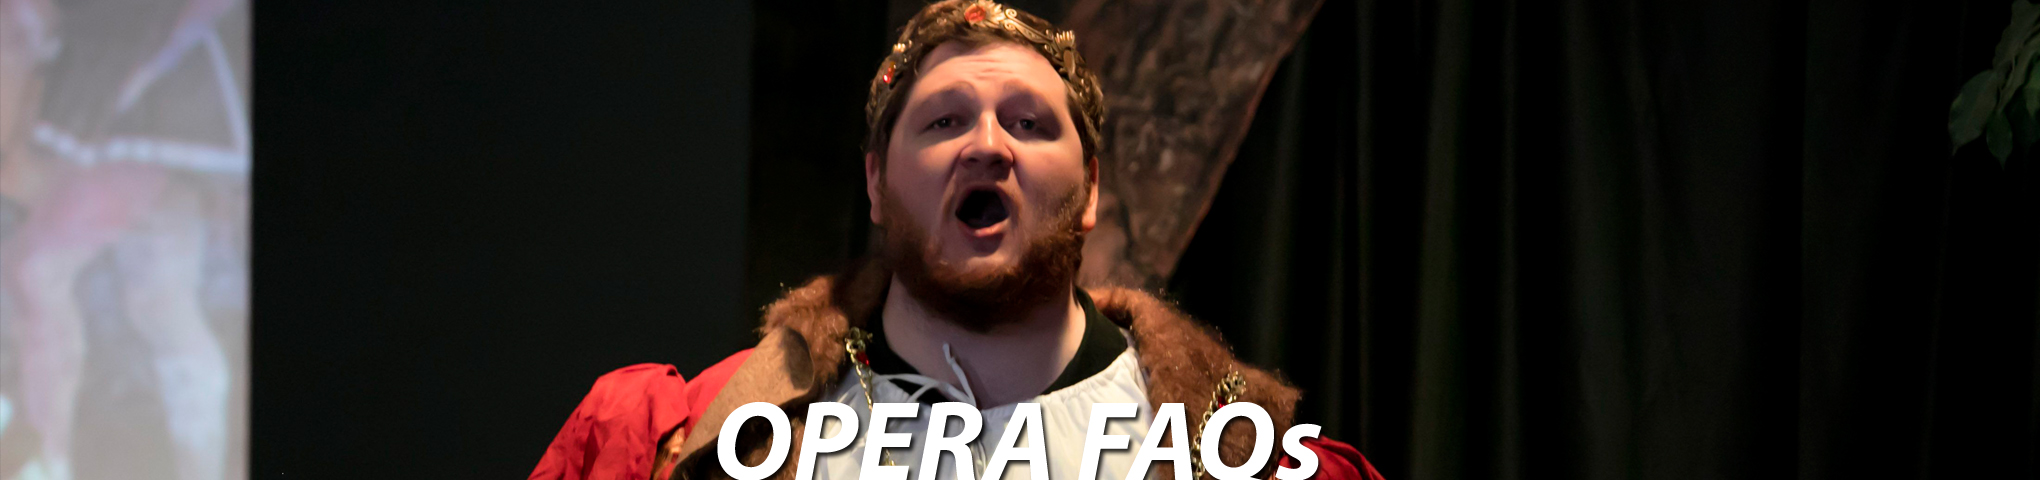 Opera FAQs at Lyrical Opera Theater